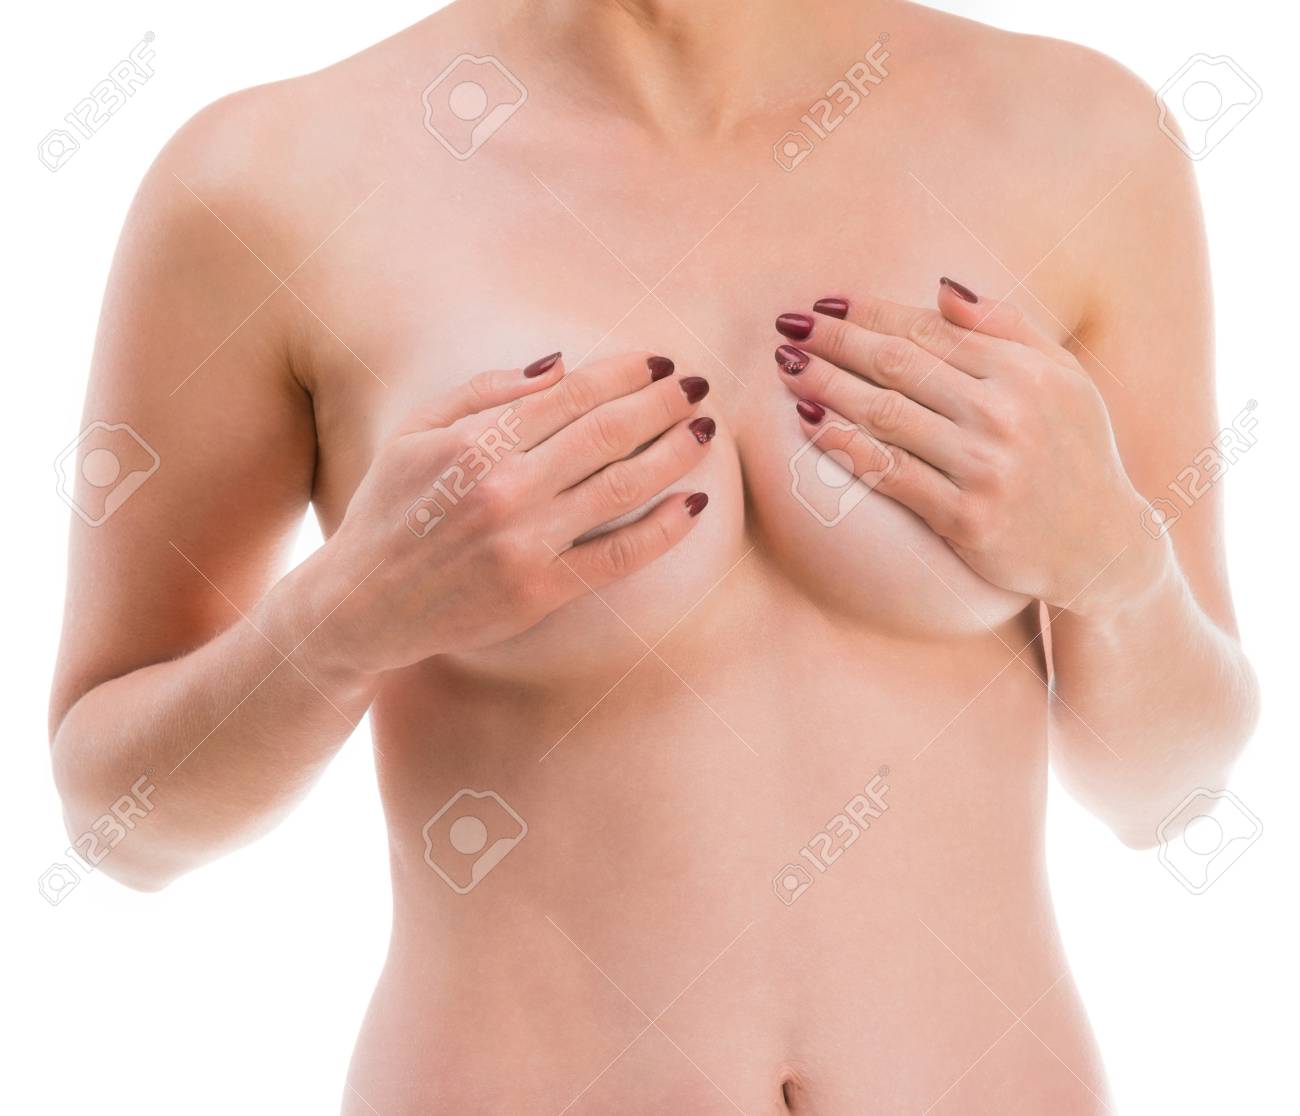 caroline lasnier recommends naked girls breast pic